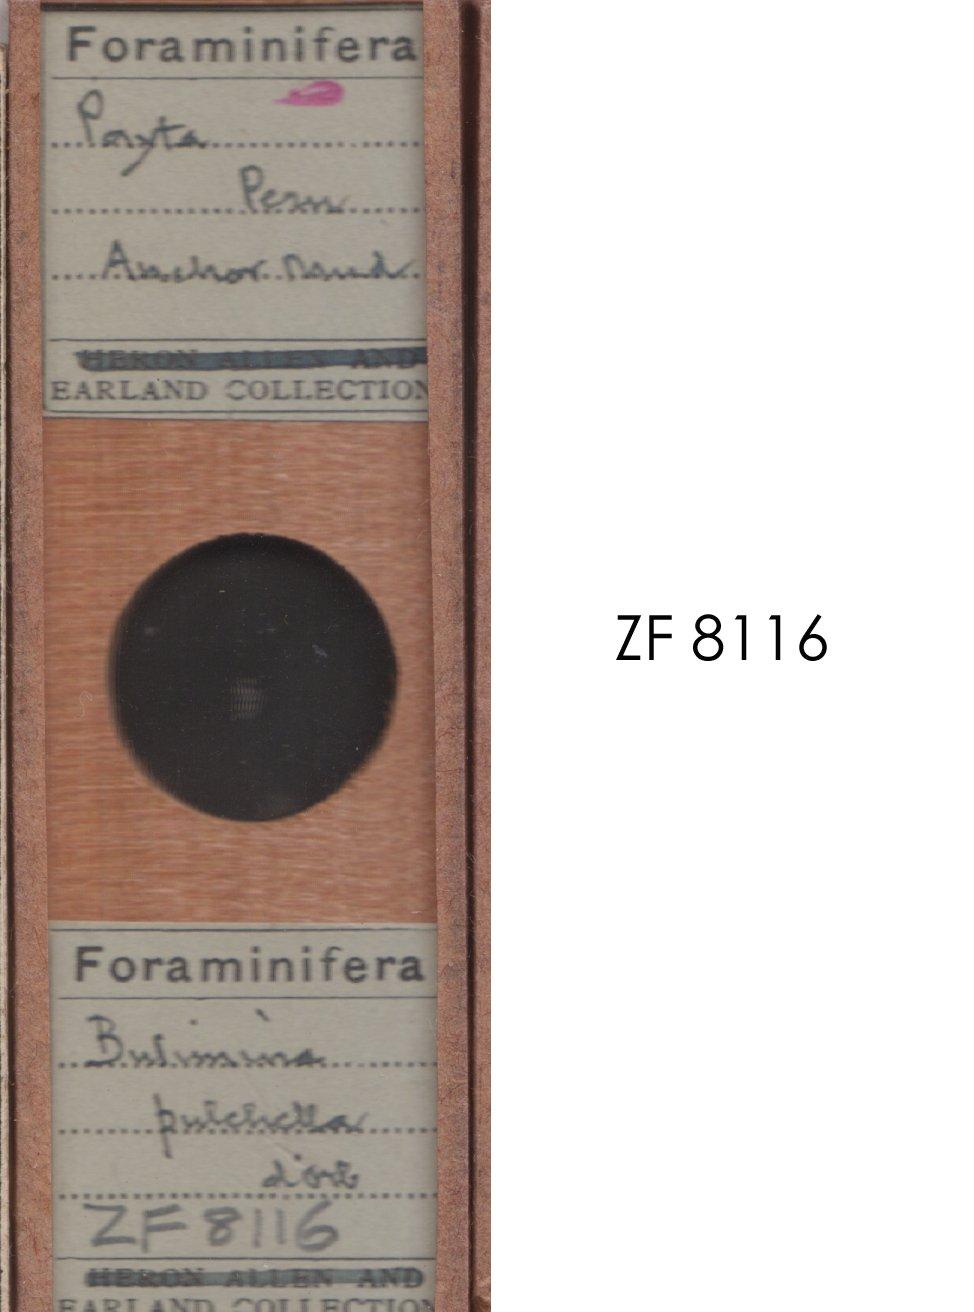 To NHMUK collection (Bulimina pulchella Orbigny, 1839; NHMUK:ecatalogue:9055638)